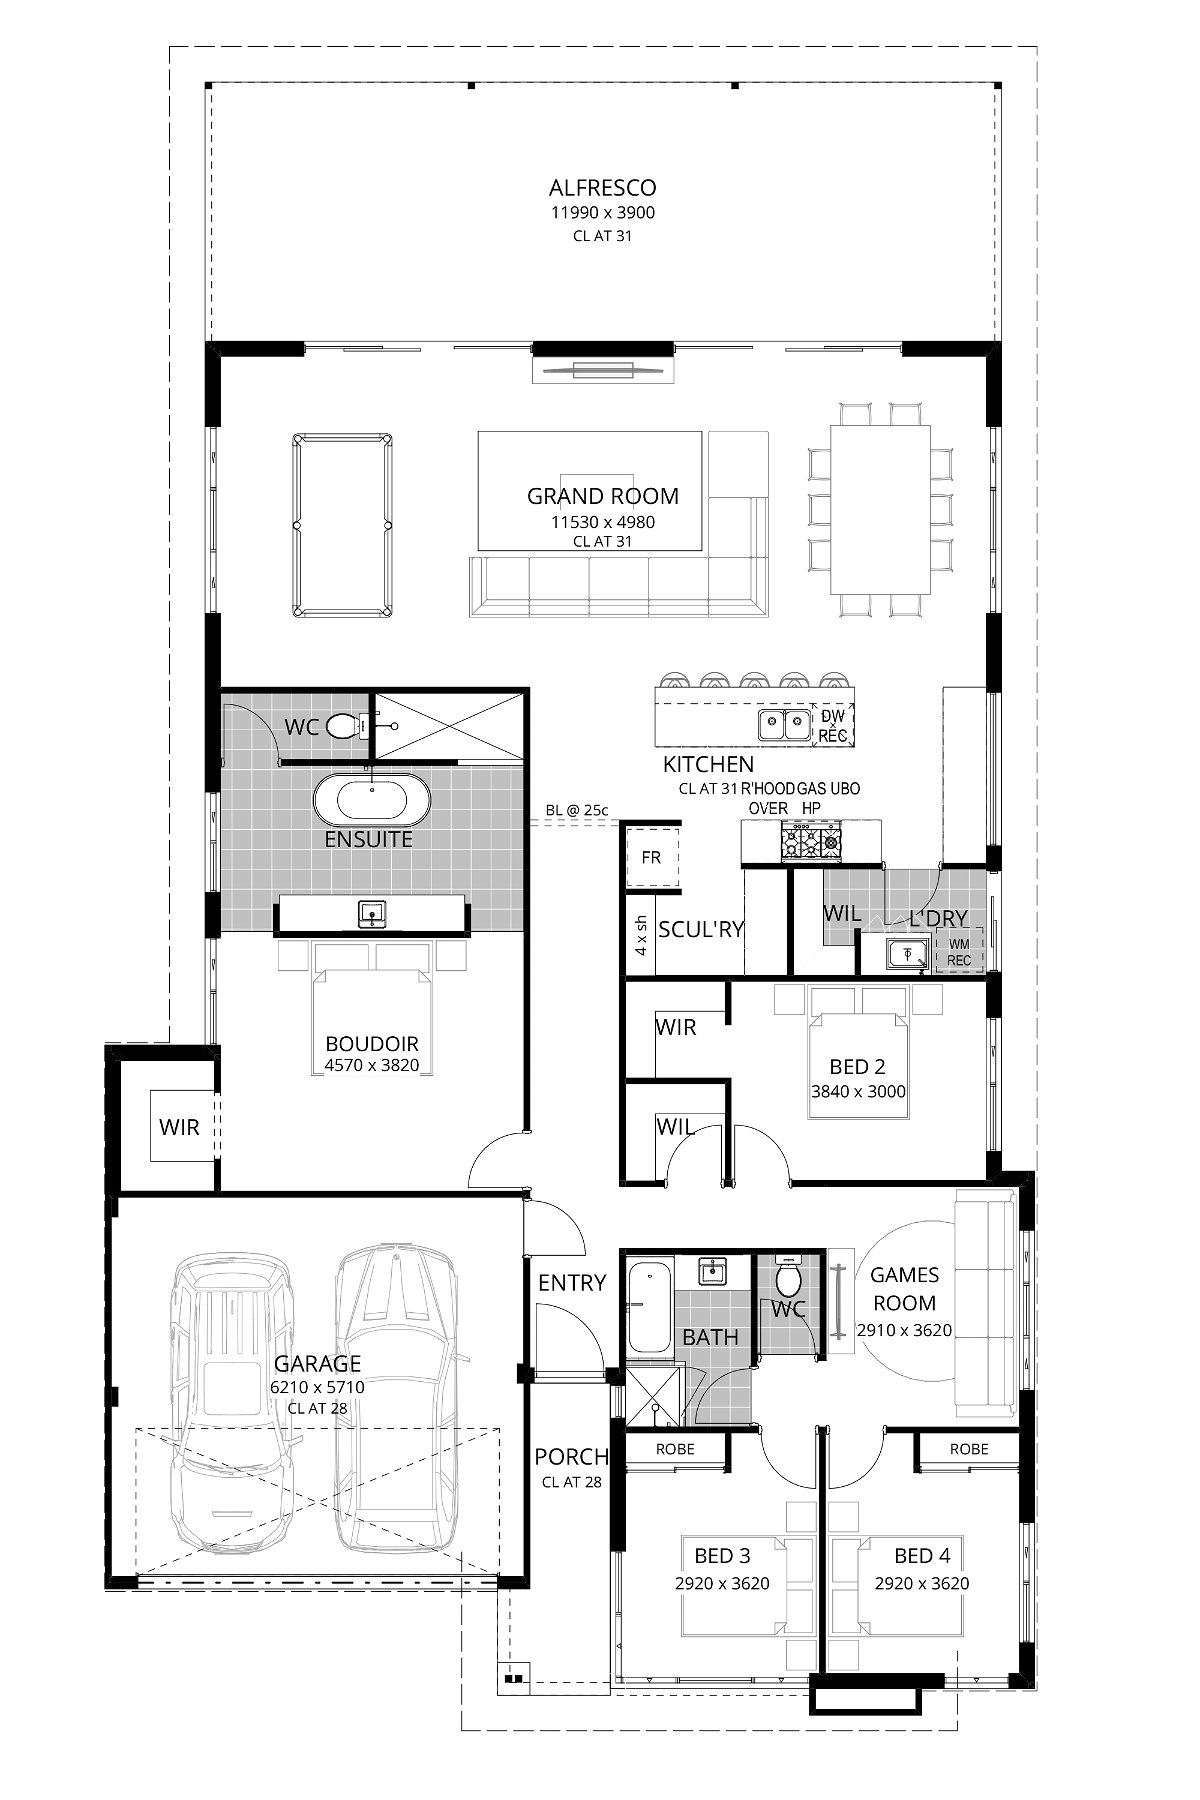 Residential Attitudes - Dreamweaver - Floorplan - Dreamweaver Floorplan Website